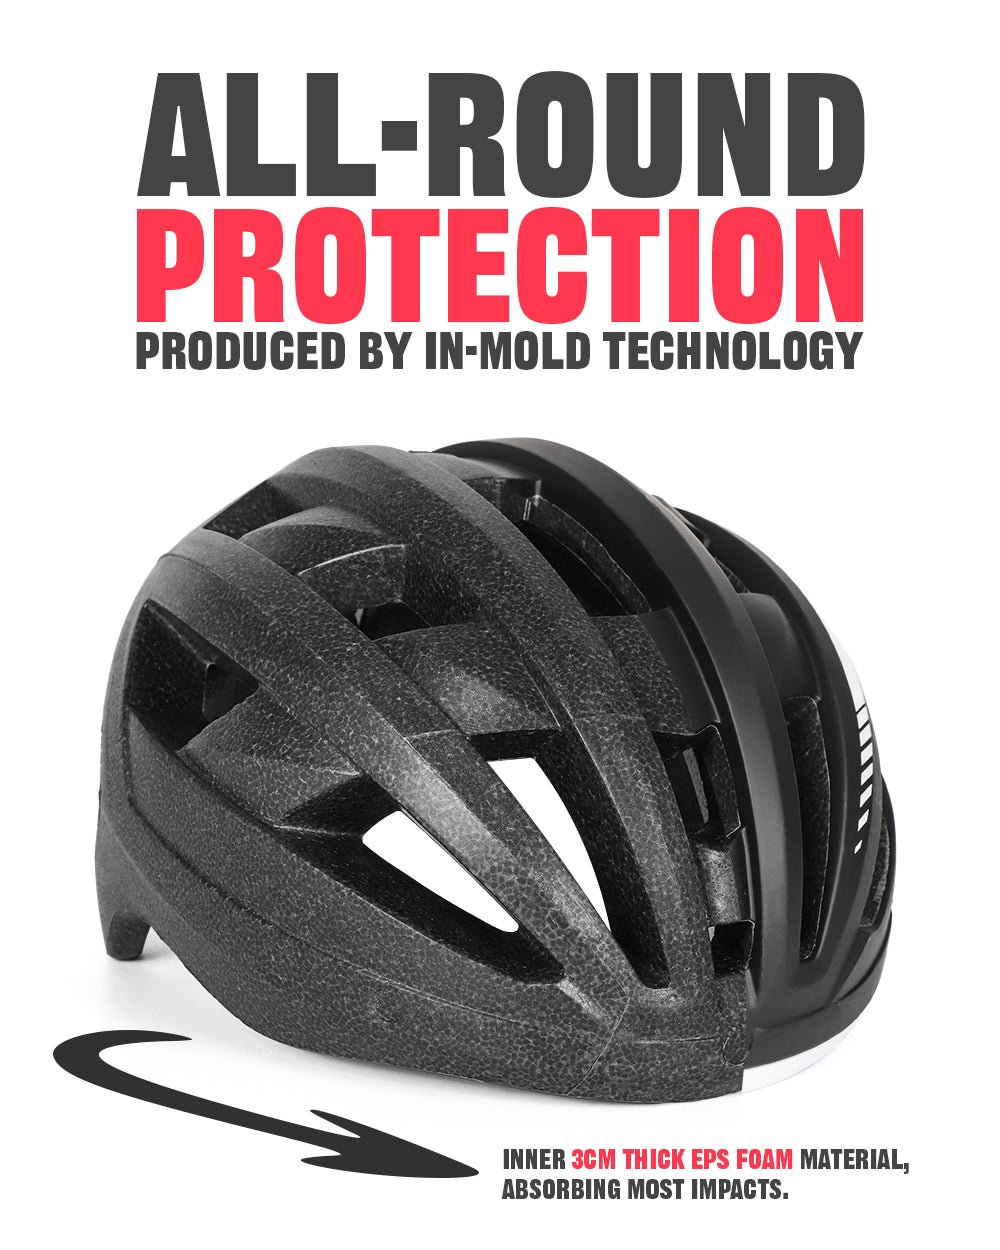 Goggles Bike Helmet w/ USB Lamp & Visor For MTB & E-bike Riders Adults Helmets VICTGOAL adultshelmets helmets